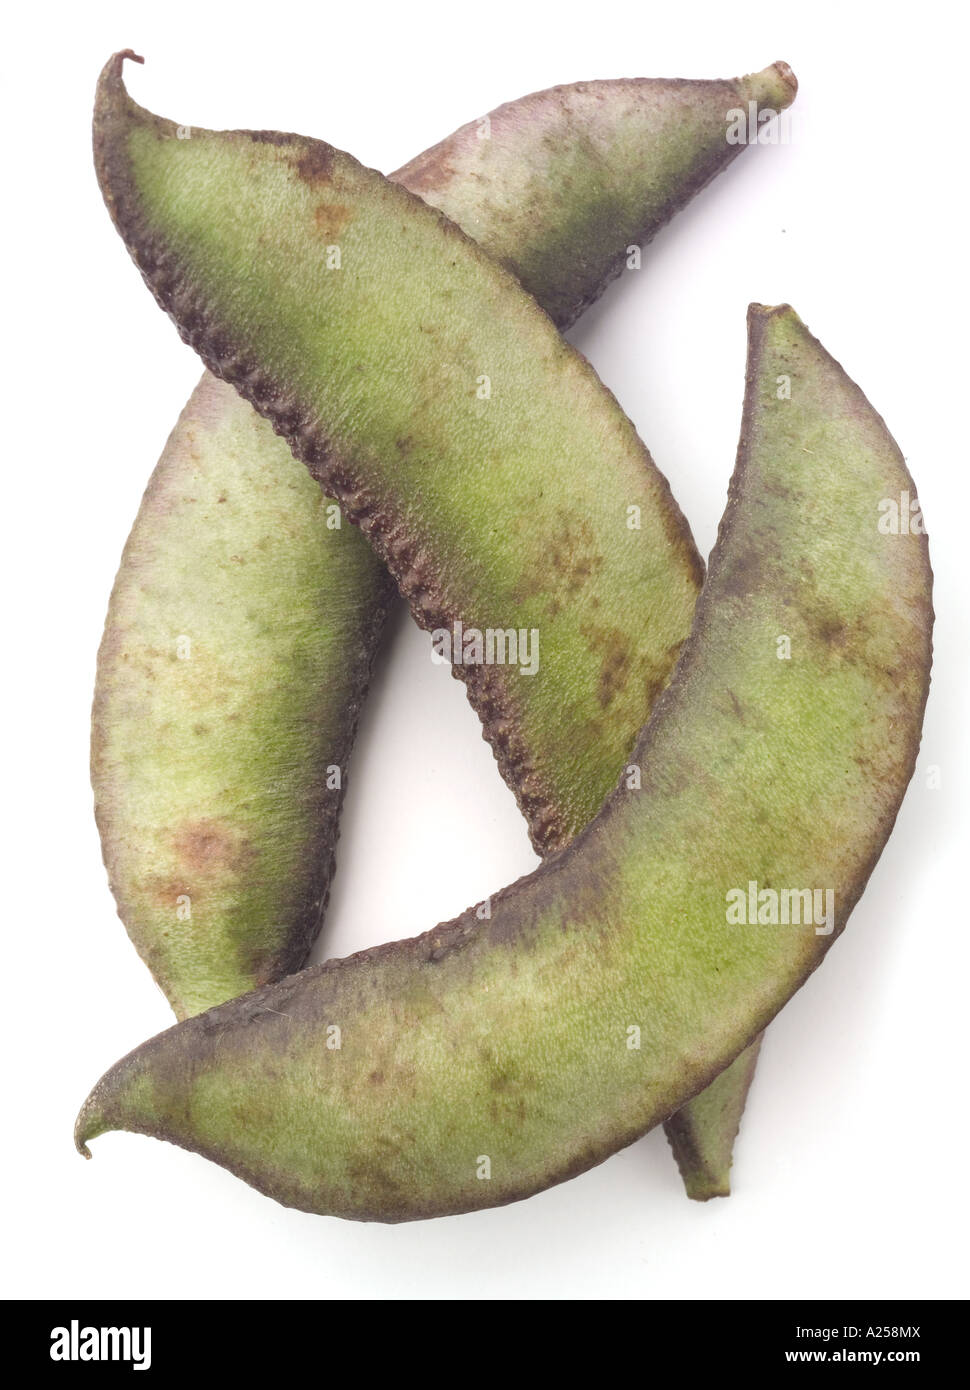 bean called seem in bangladeshi Stock Photo